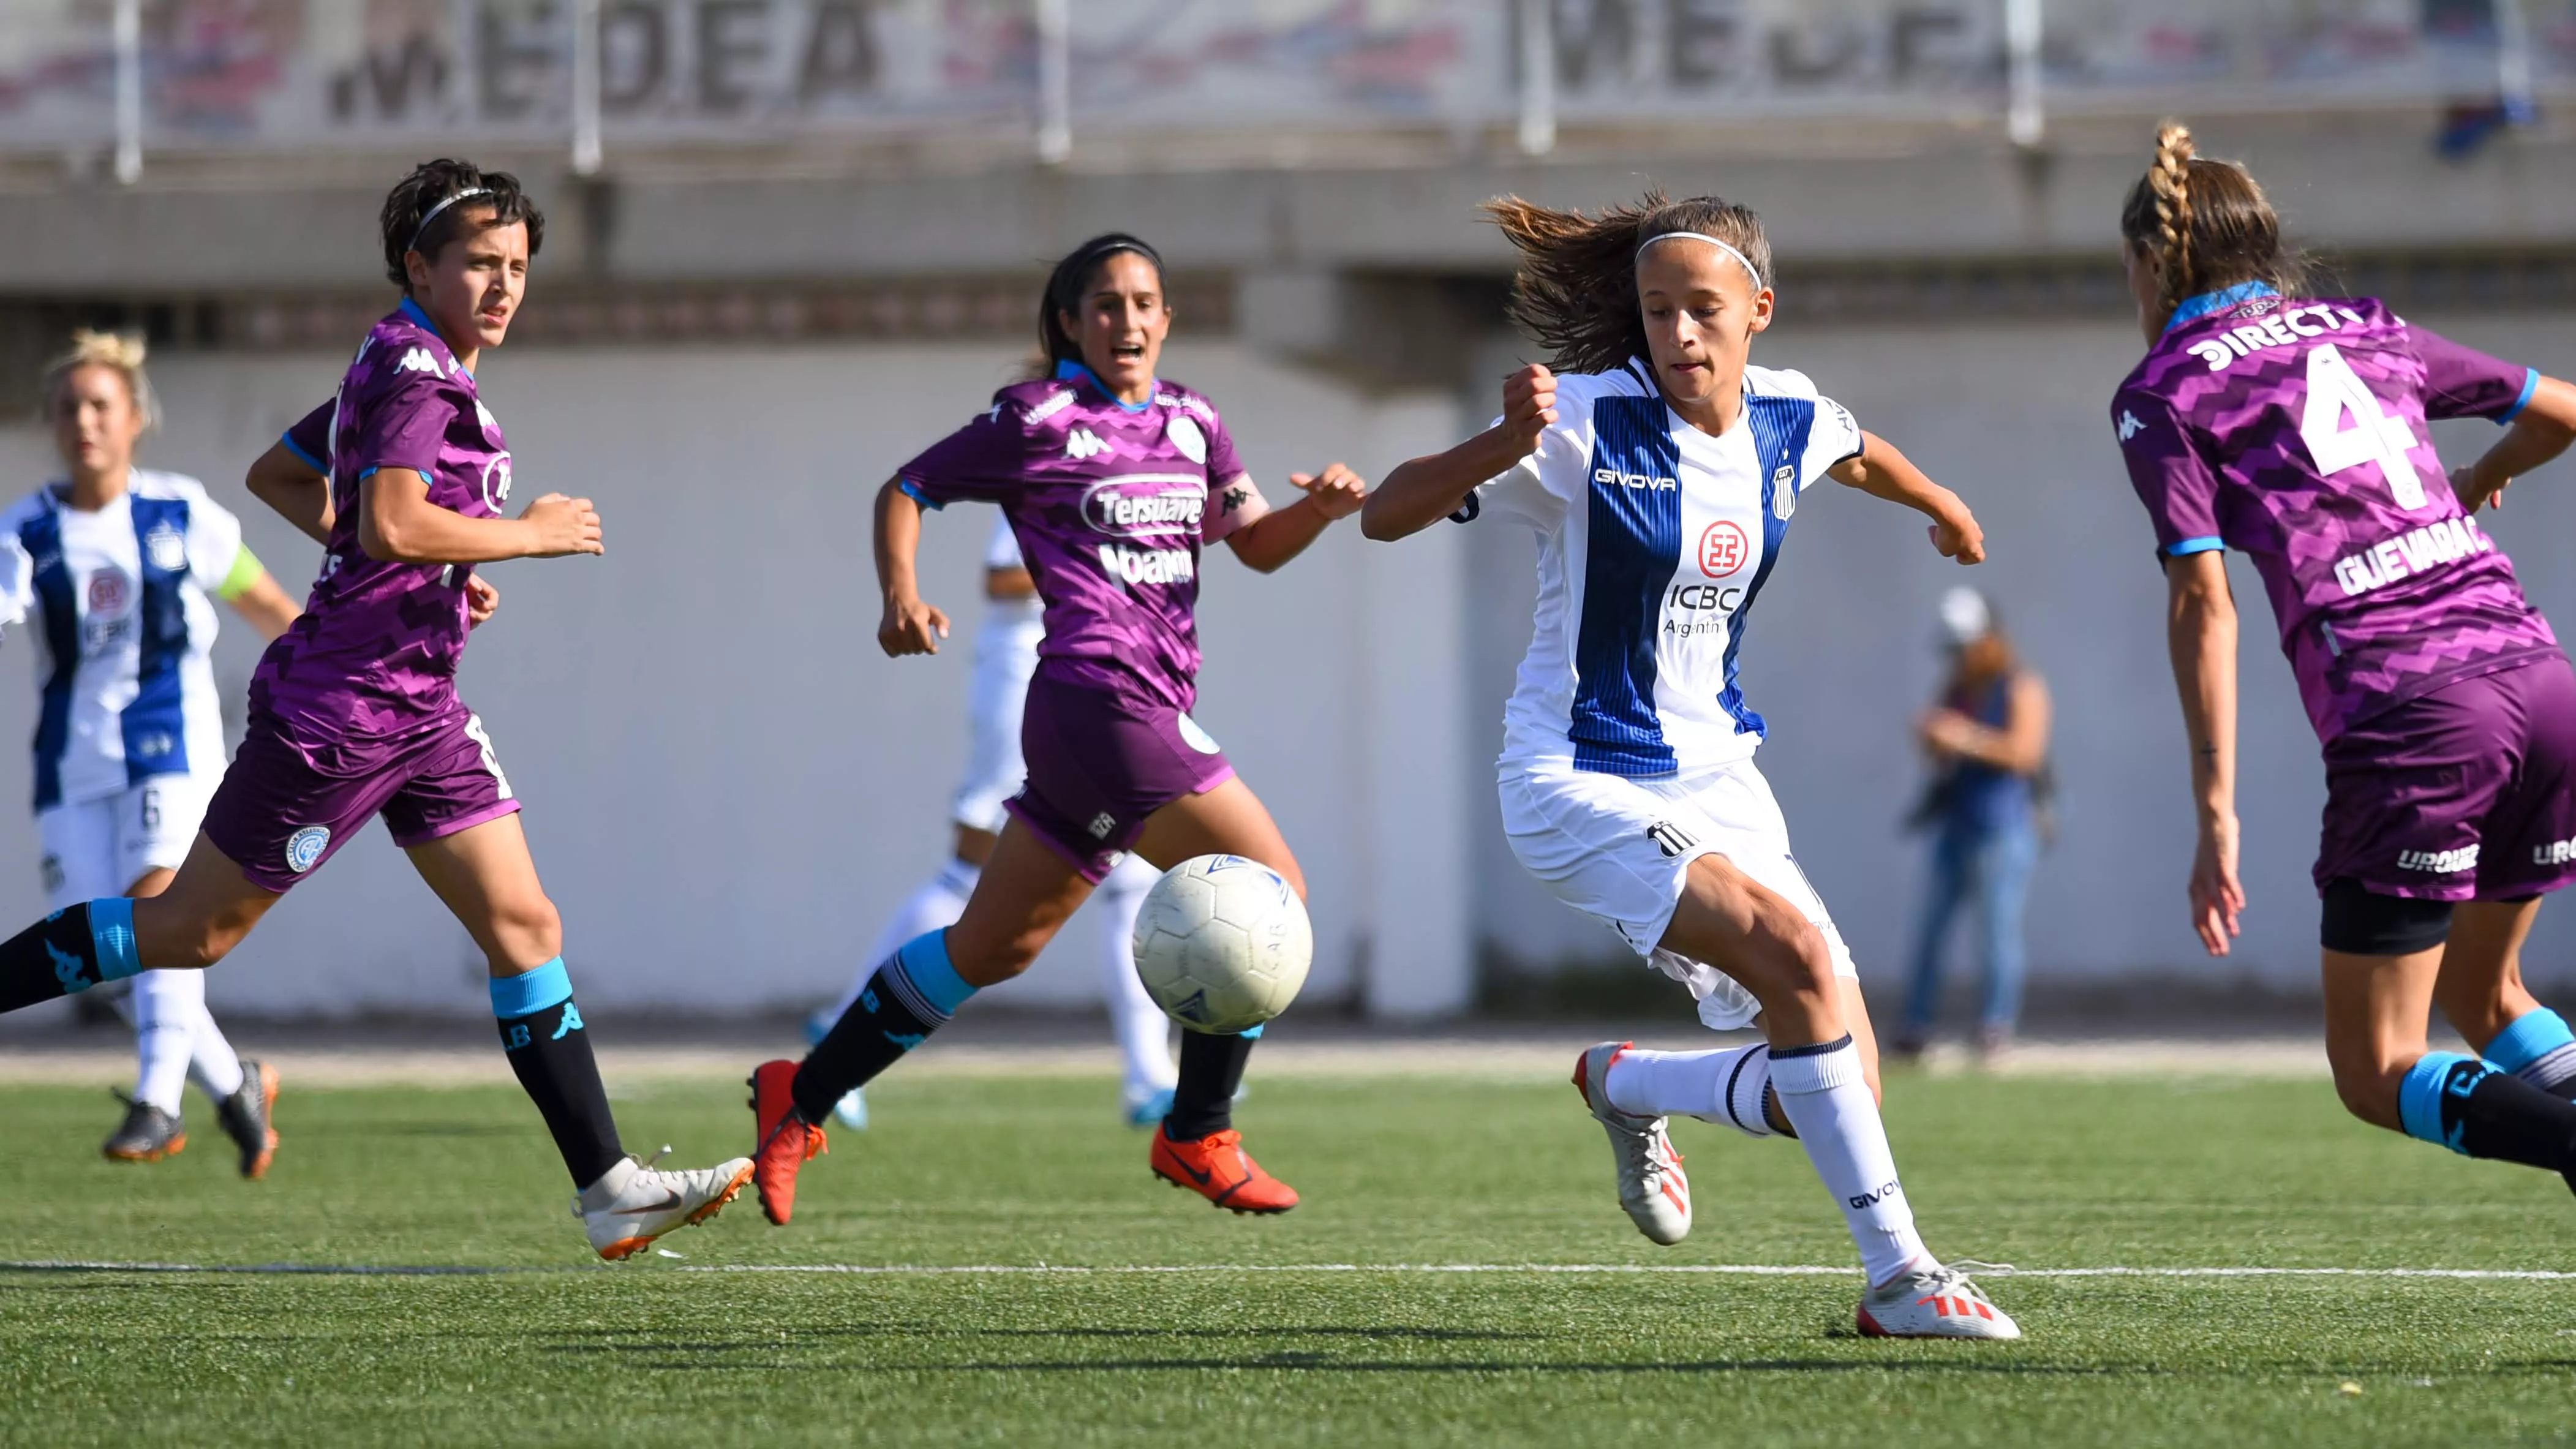 La cordobesa Gramaglia jugará en la mejor liga de fútbol femenino del mundo